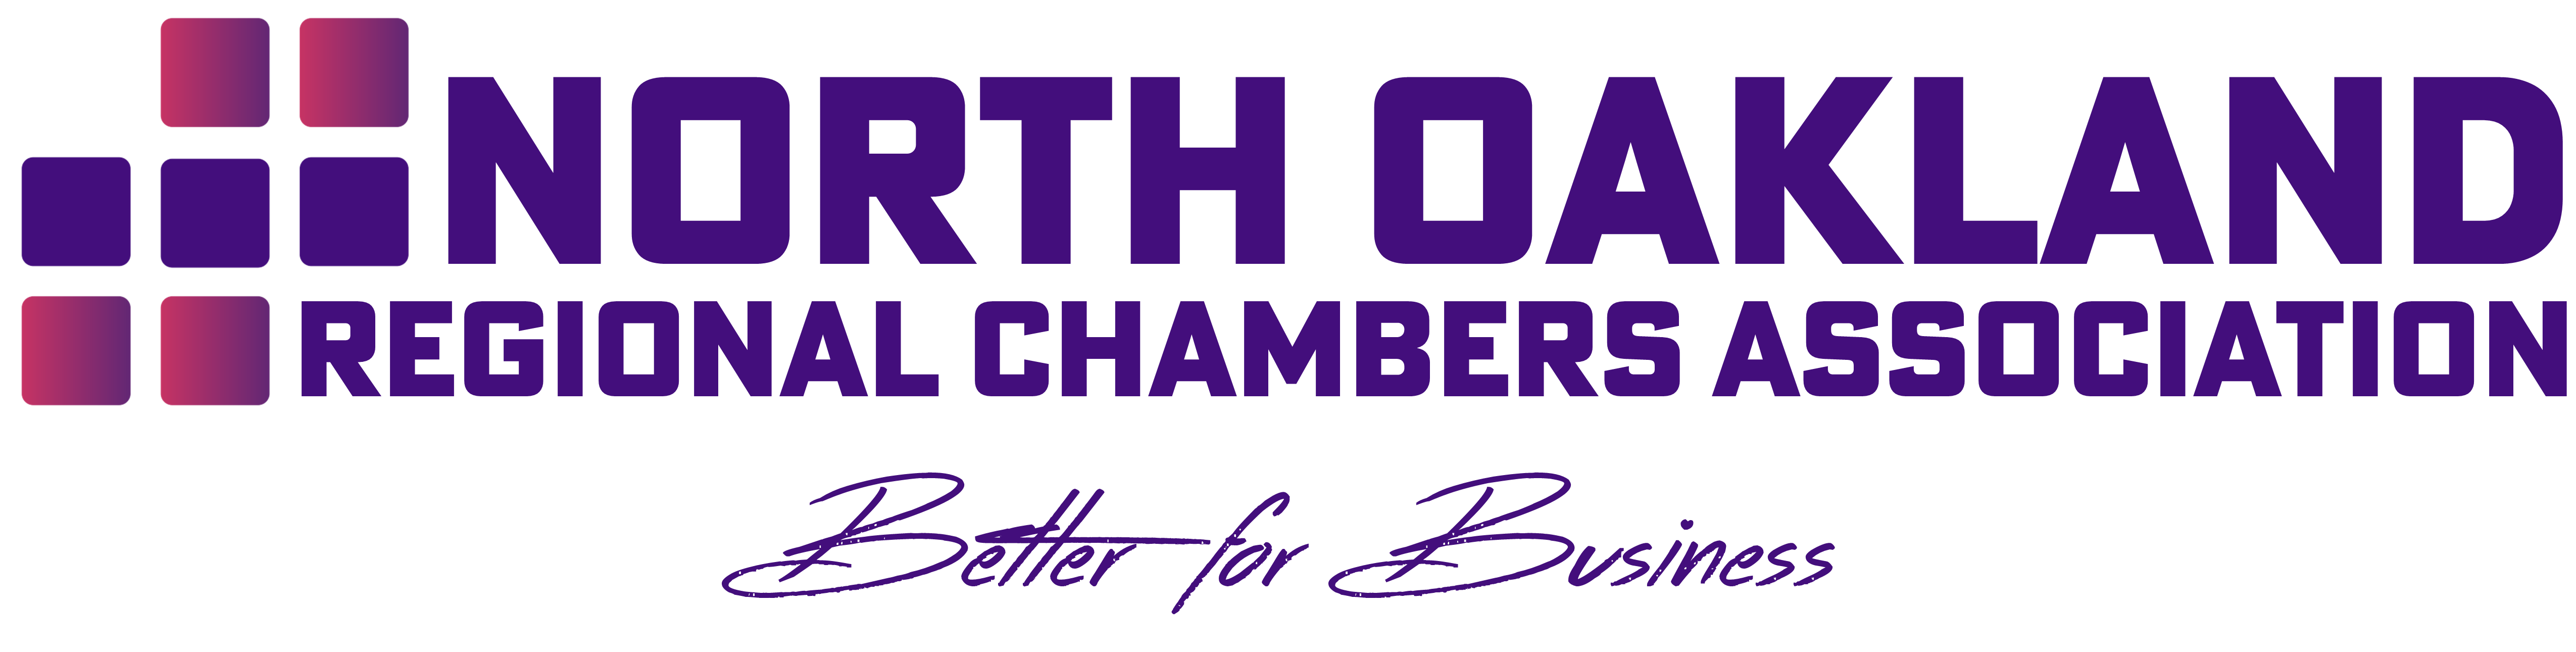 North Oakland Regional Chambers Assoociation